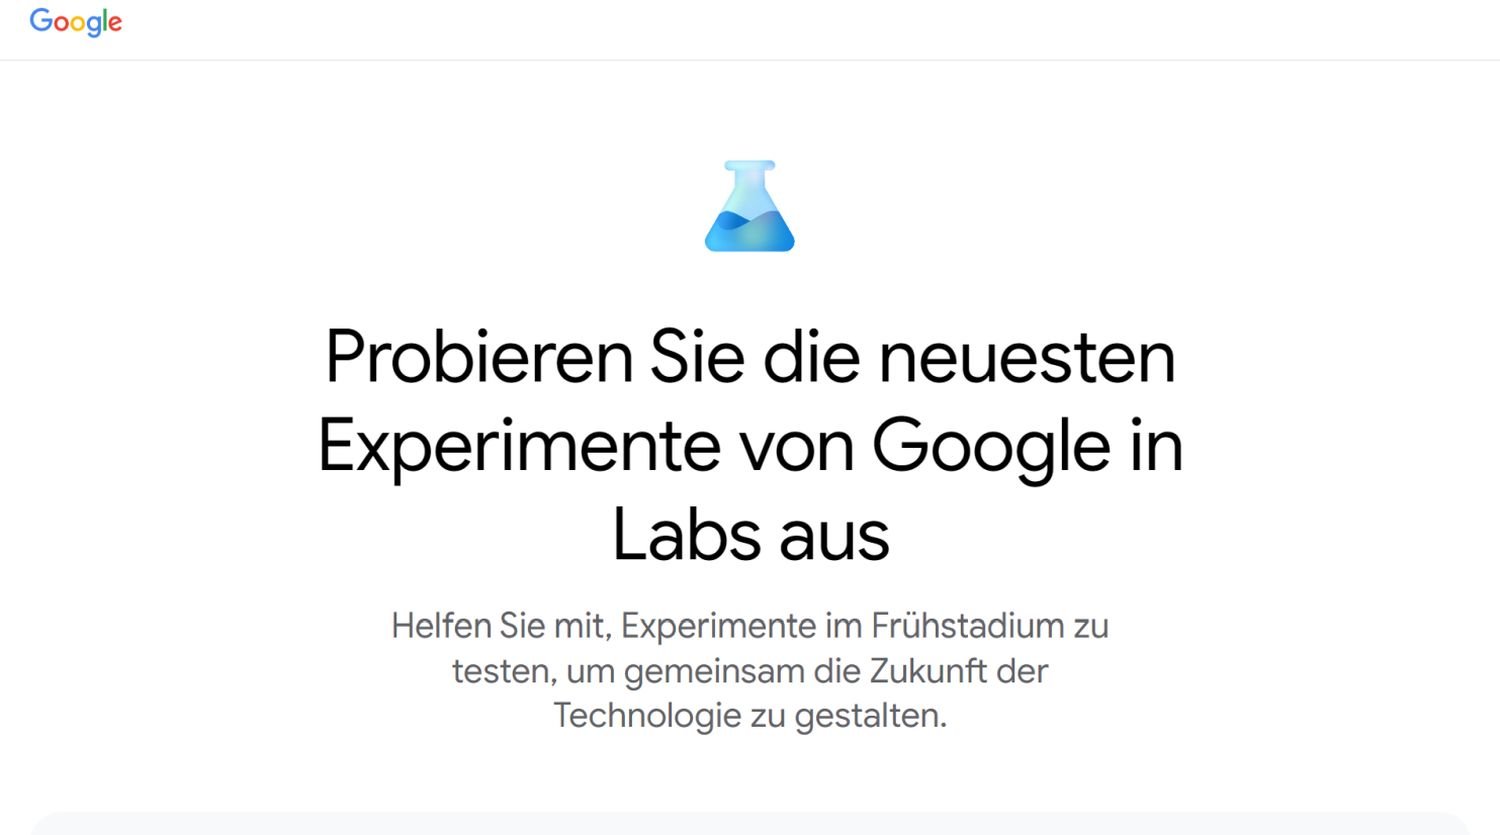 google labs